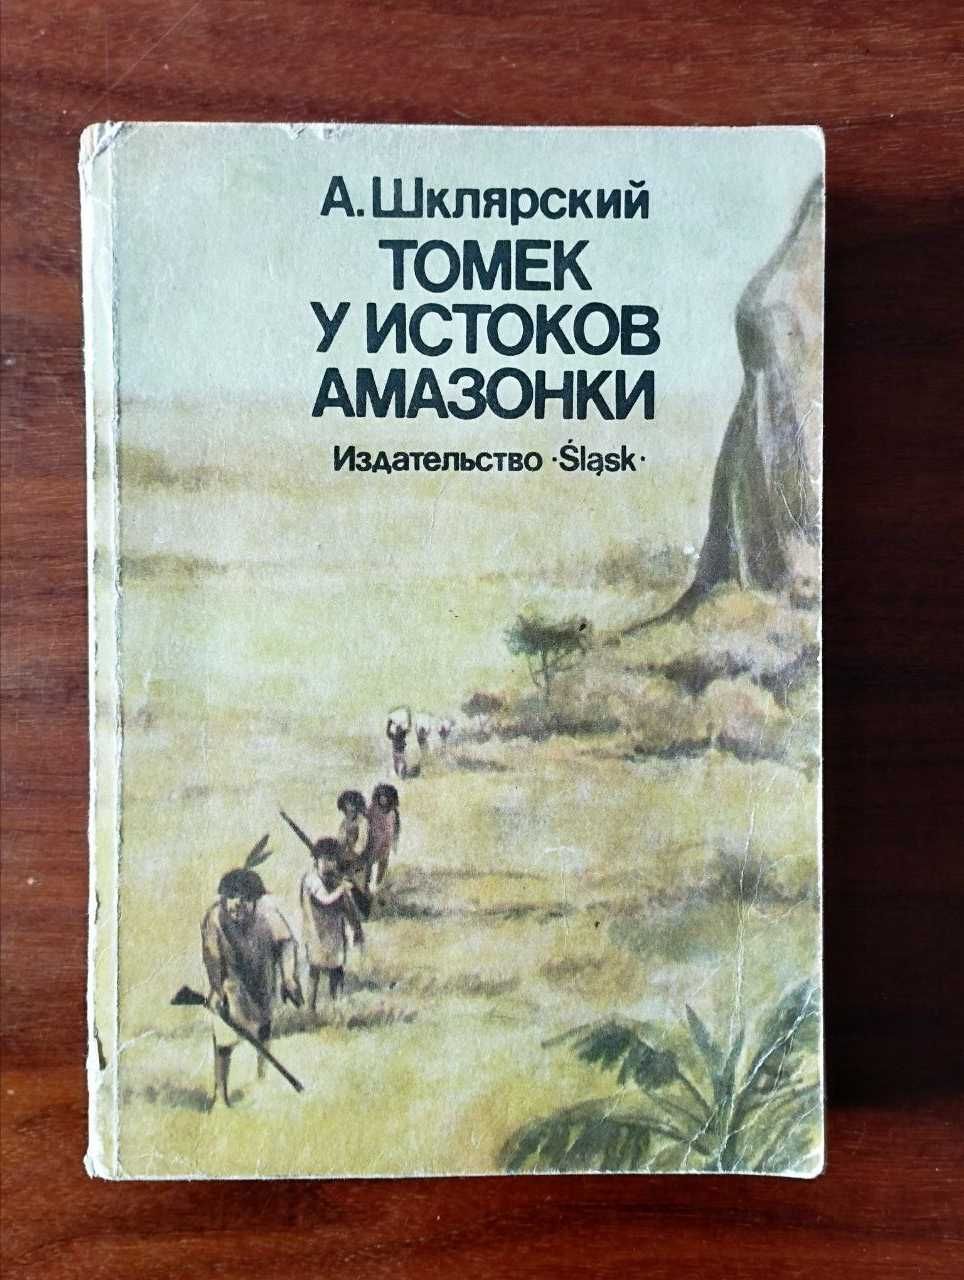 Книжка «Томек у истоков Амазонки», Альфред Шклярский